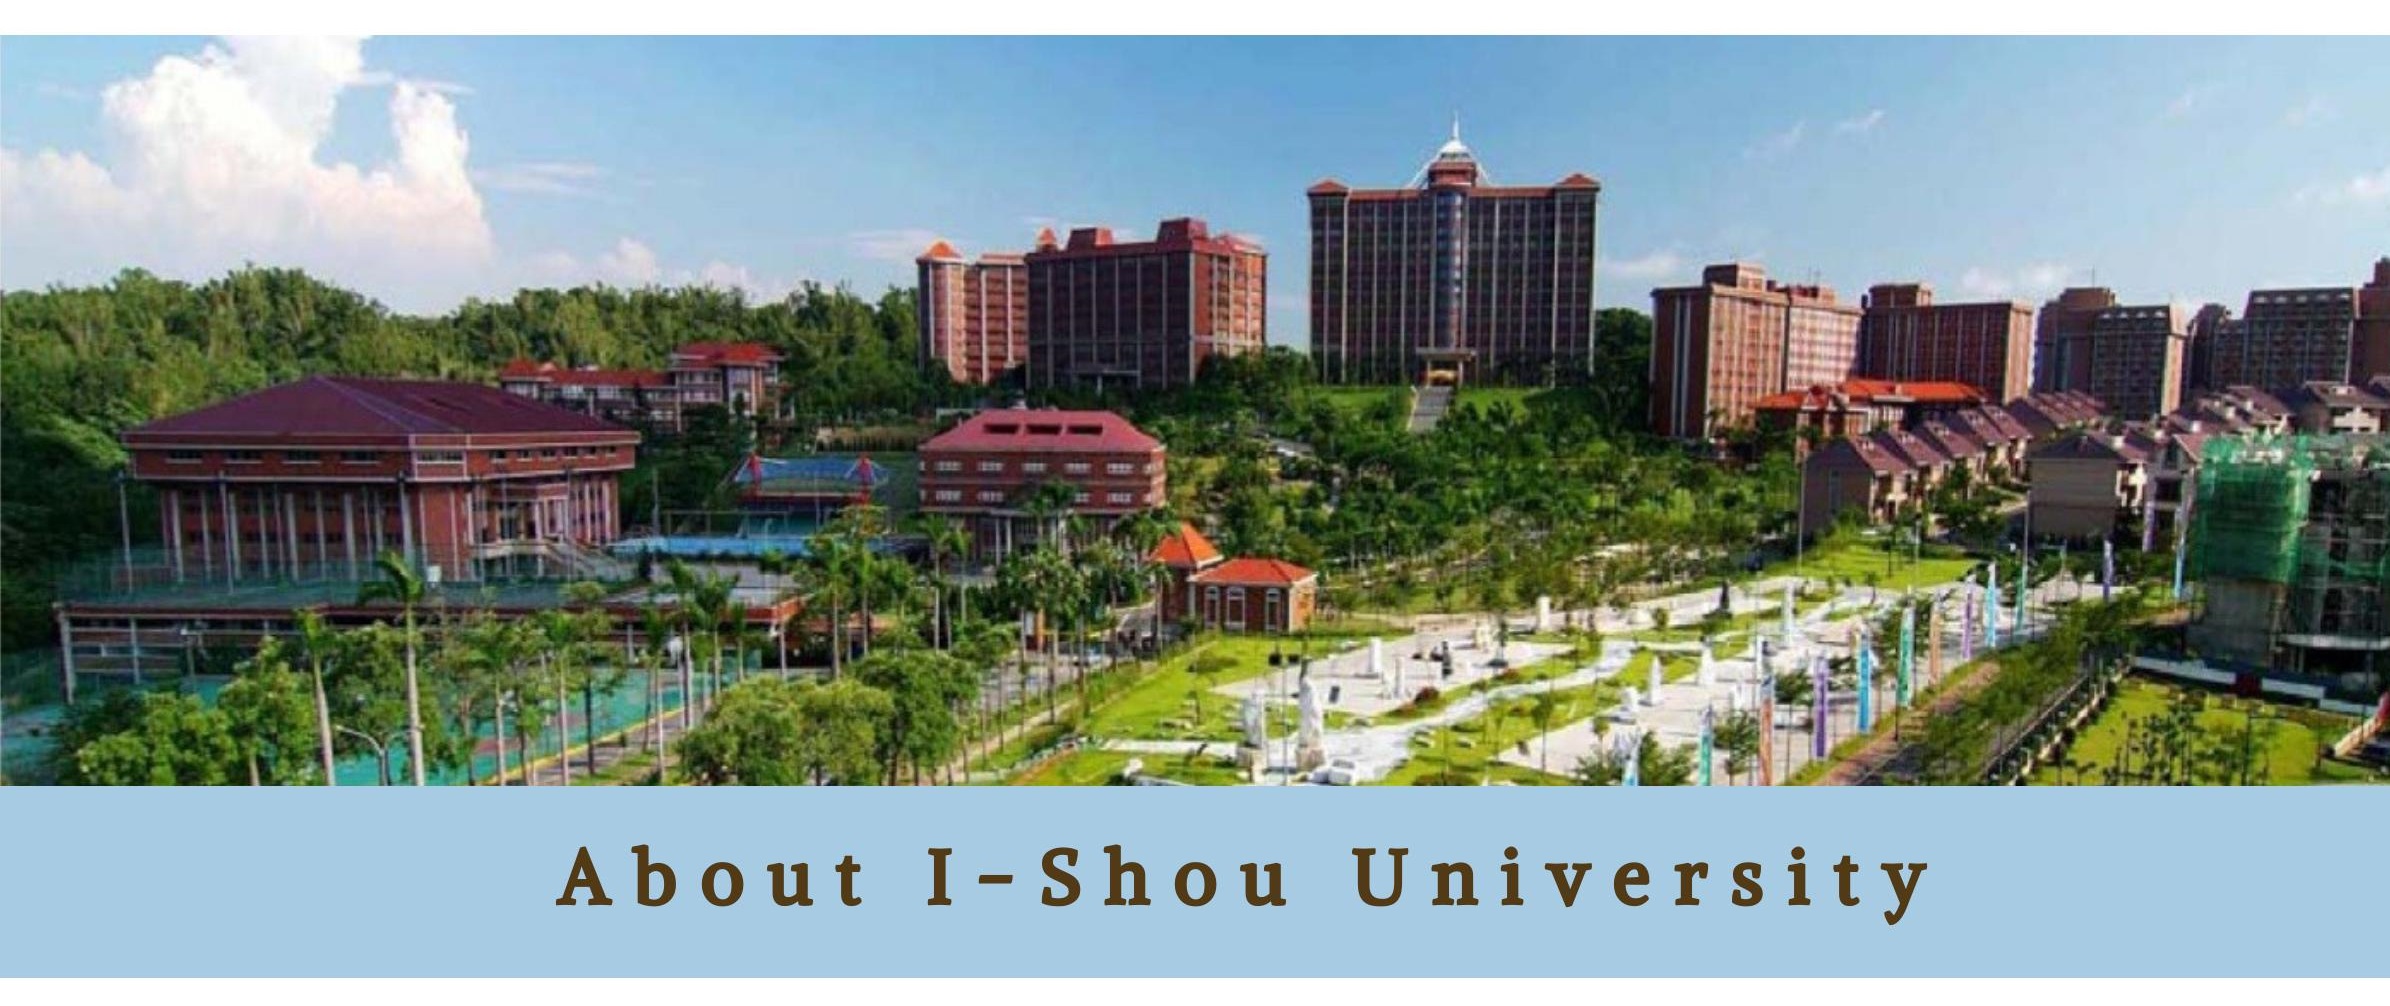 【28.4.2564】I Shou University ⭐ (2021 Fall Semester)เปิดรับสมัครหลักสูตรที่สอนโดยใช้ภาษาอังกฤษ ระดับปริญญาเอก 3 หลักสูตร